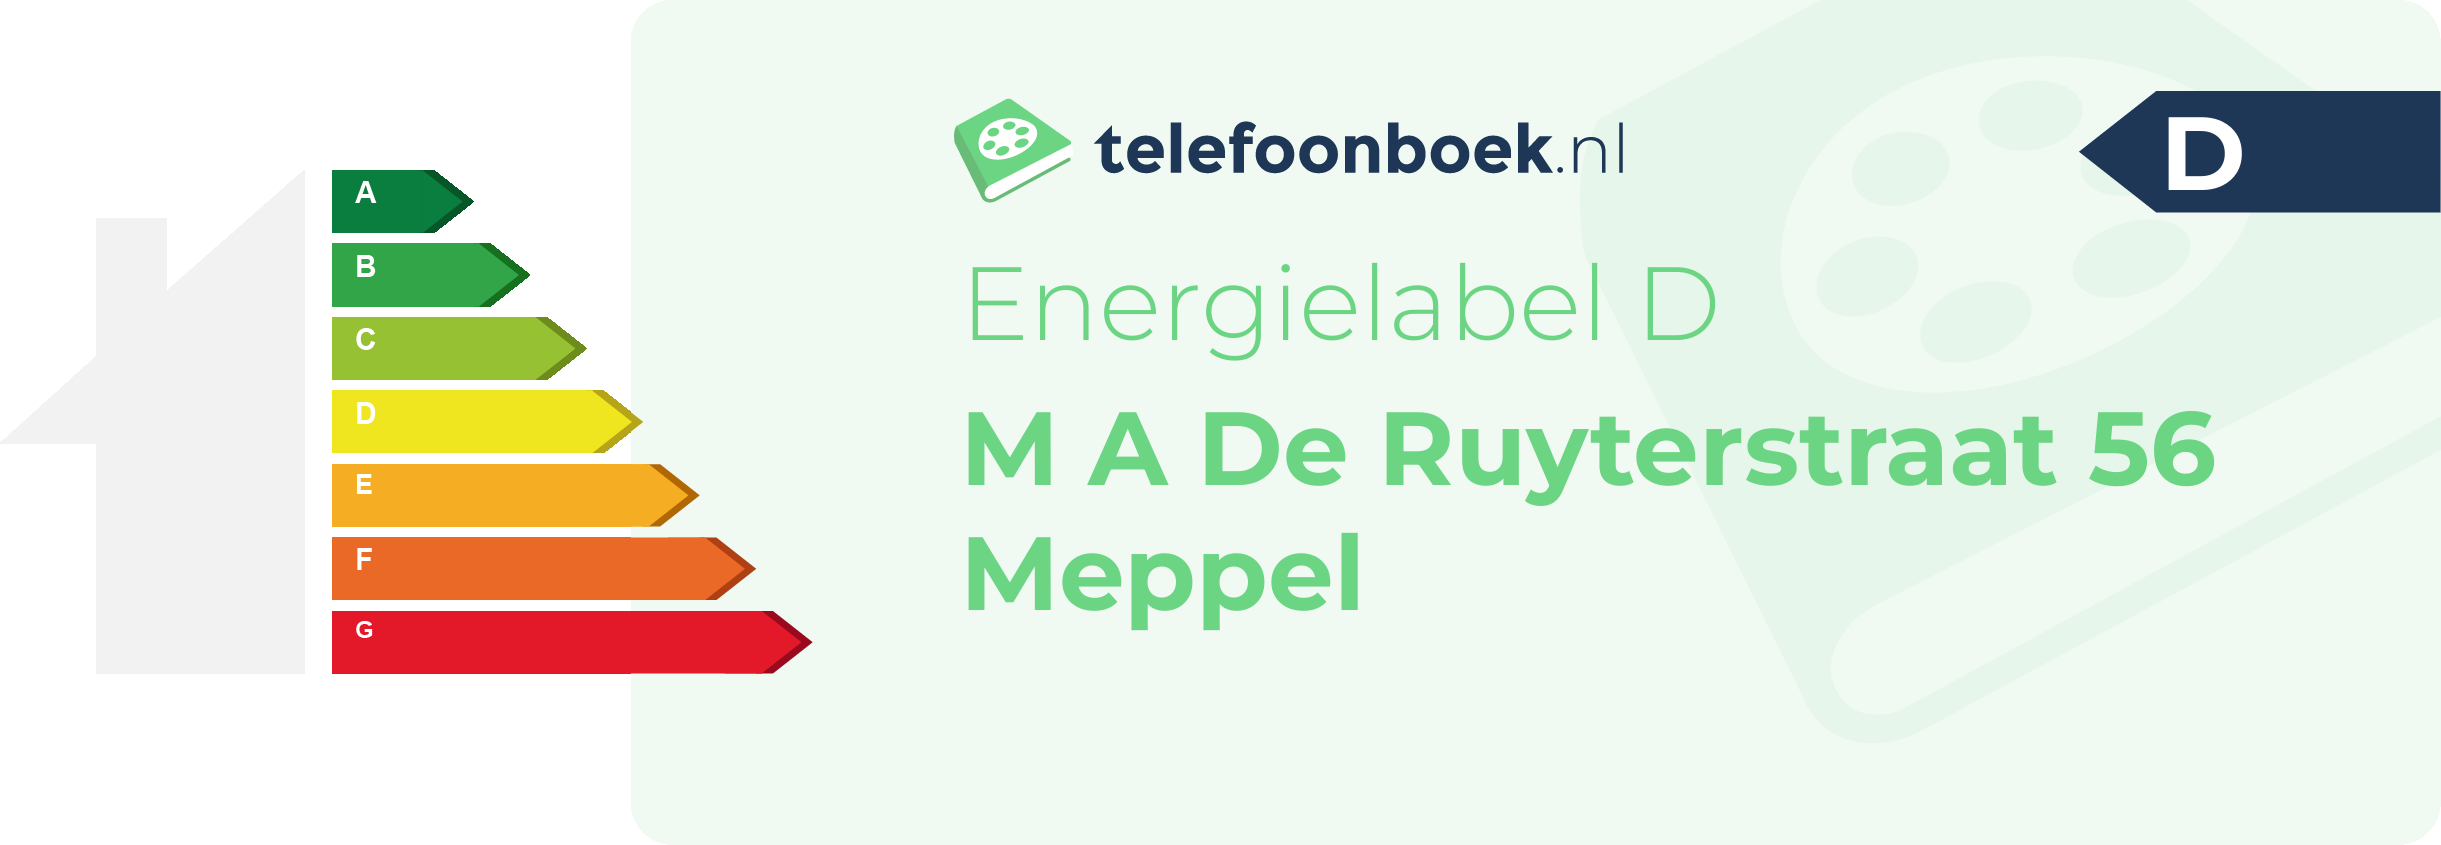 Energielabel M A De Ruyterstraat 56 Meppel